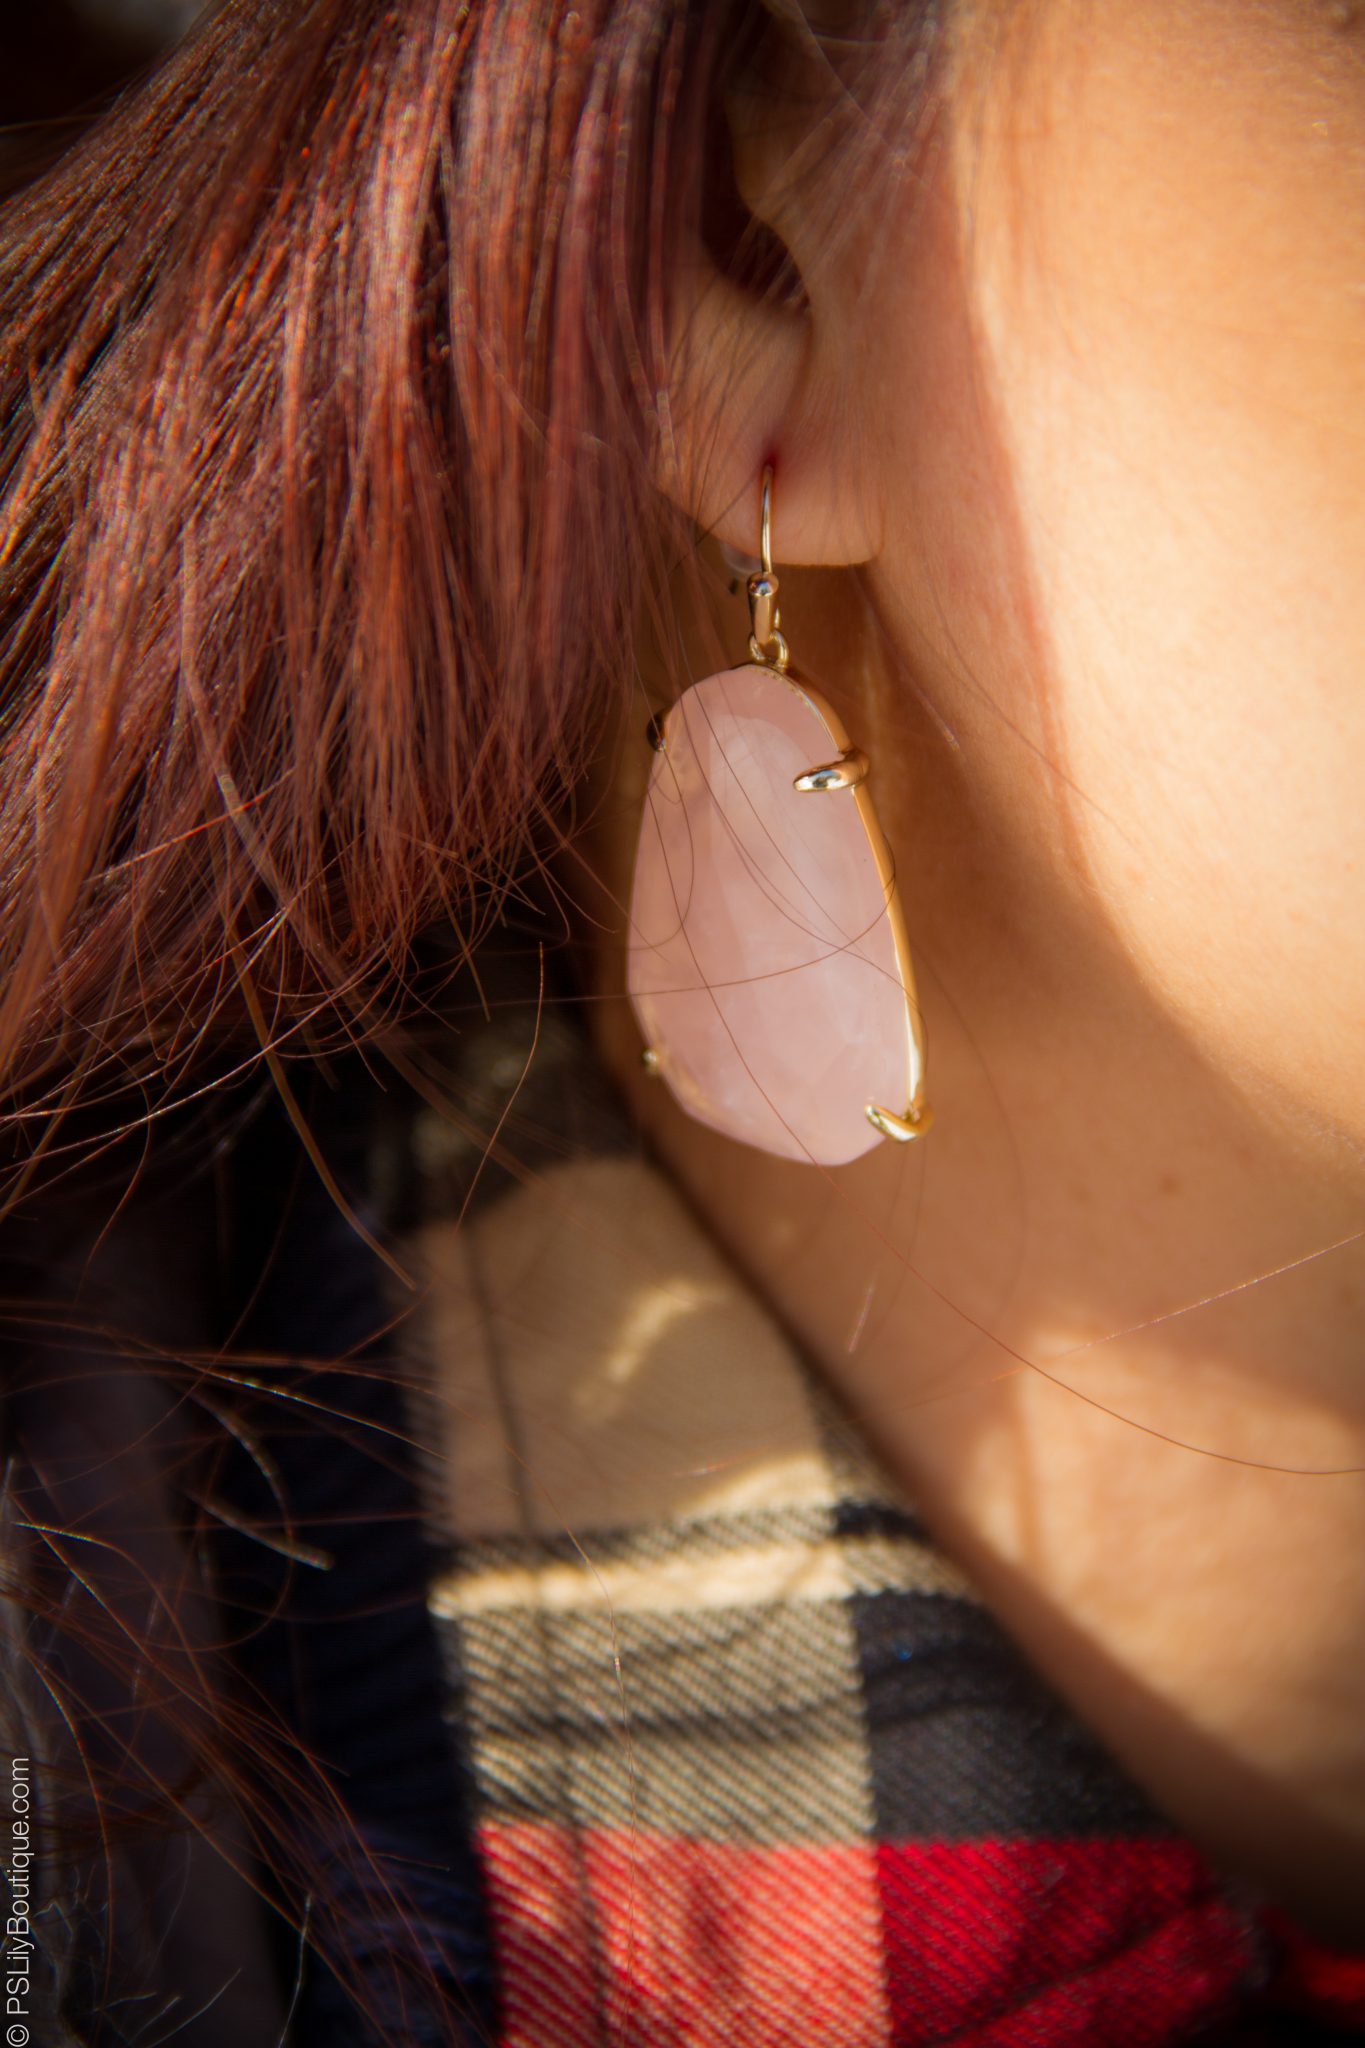 pslilyboutique-fashion-blogger-rocksbox-kendra-scott-kristina-rose-quartz-earrings, Instagram @pslilyboutique